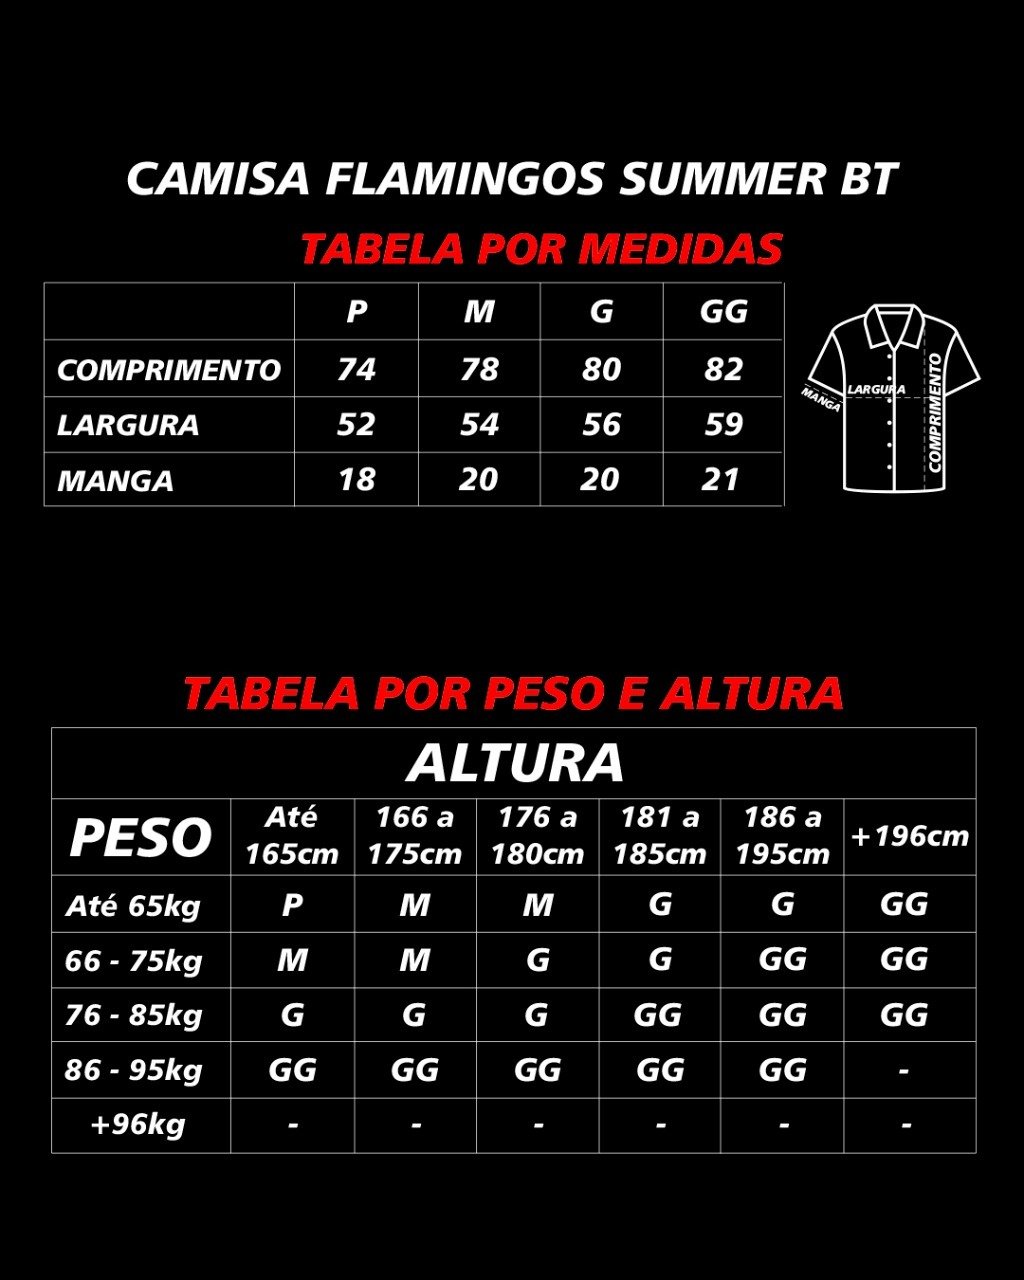 tabela de medidas camisa flamingos summer